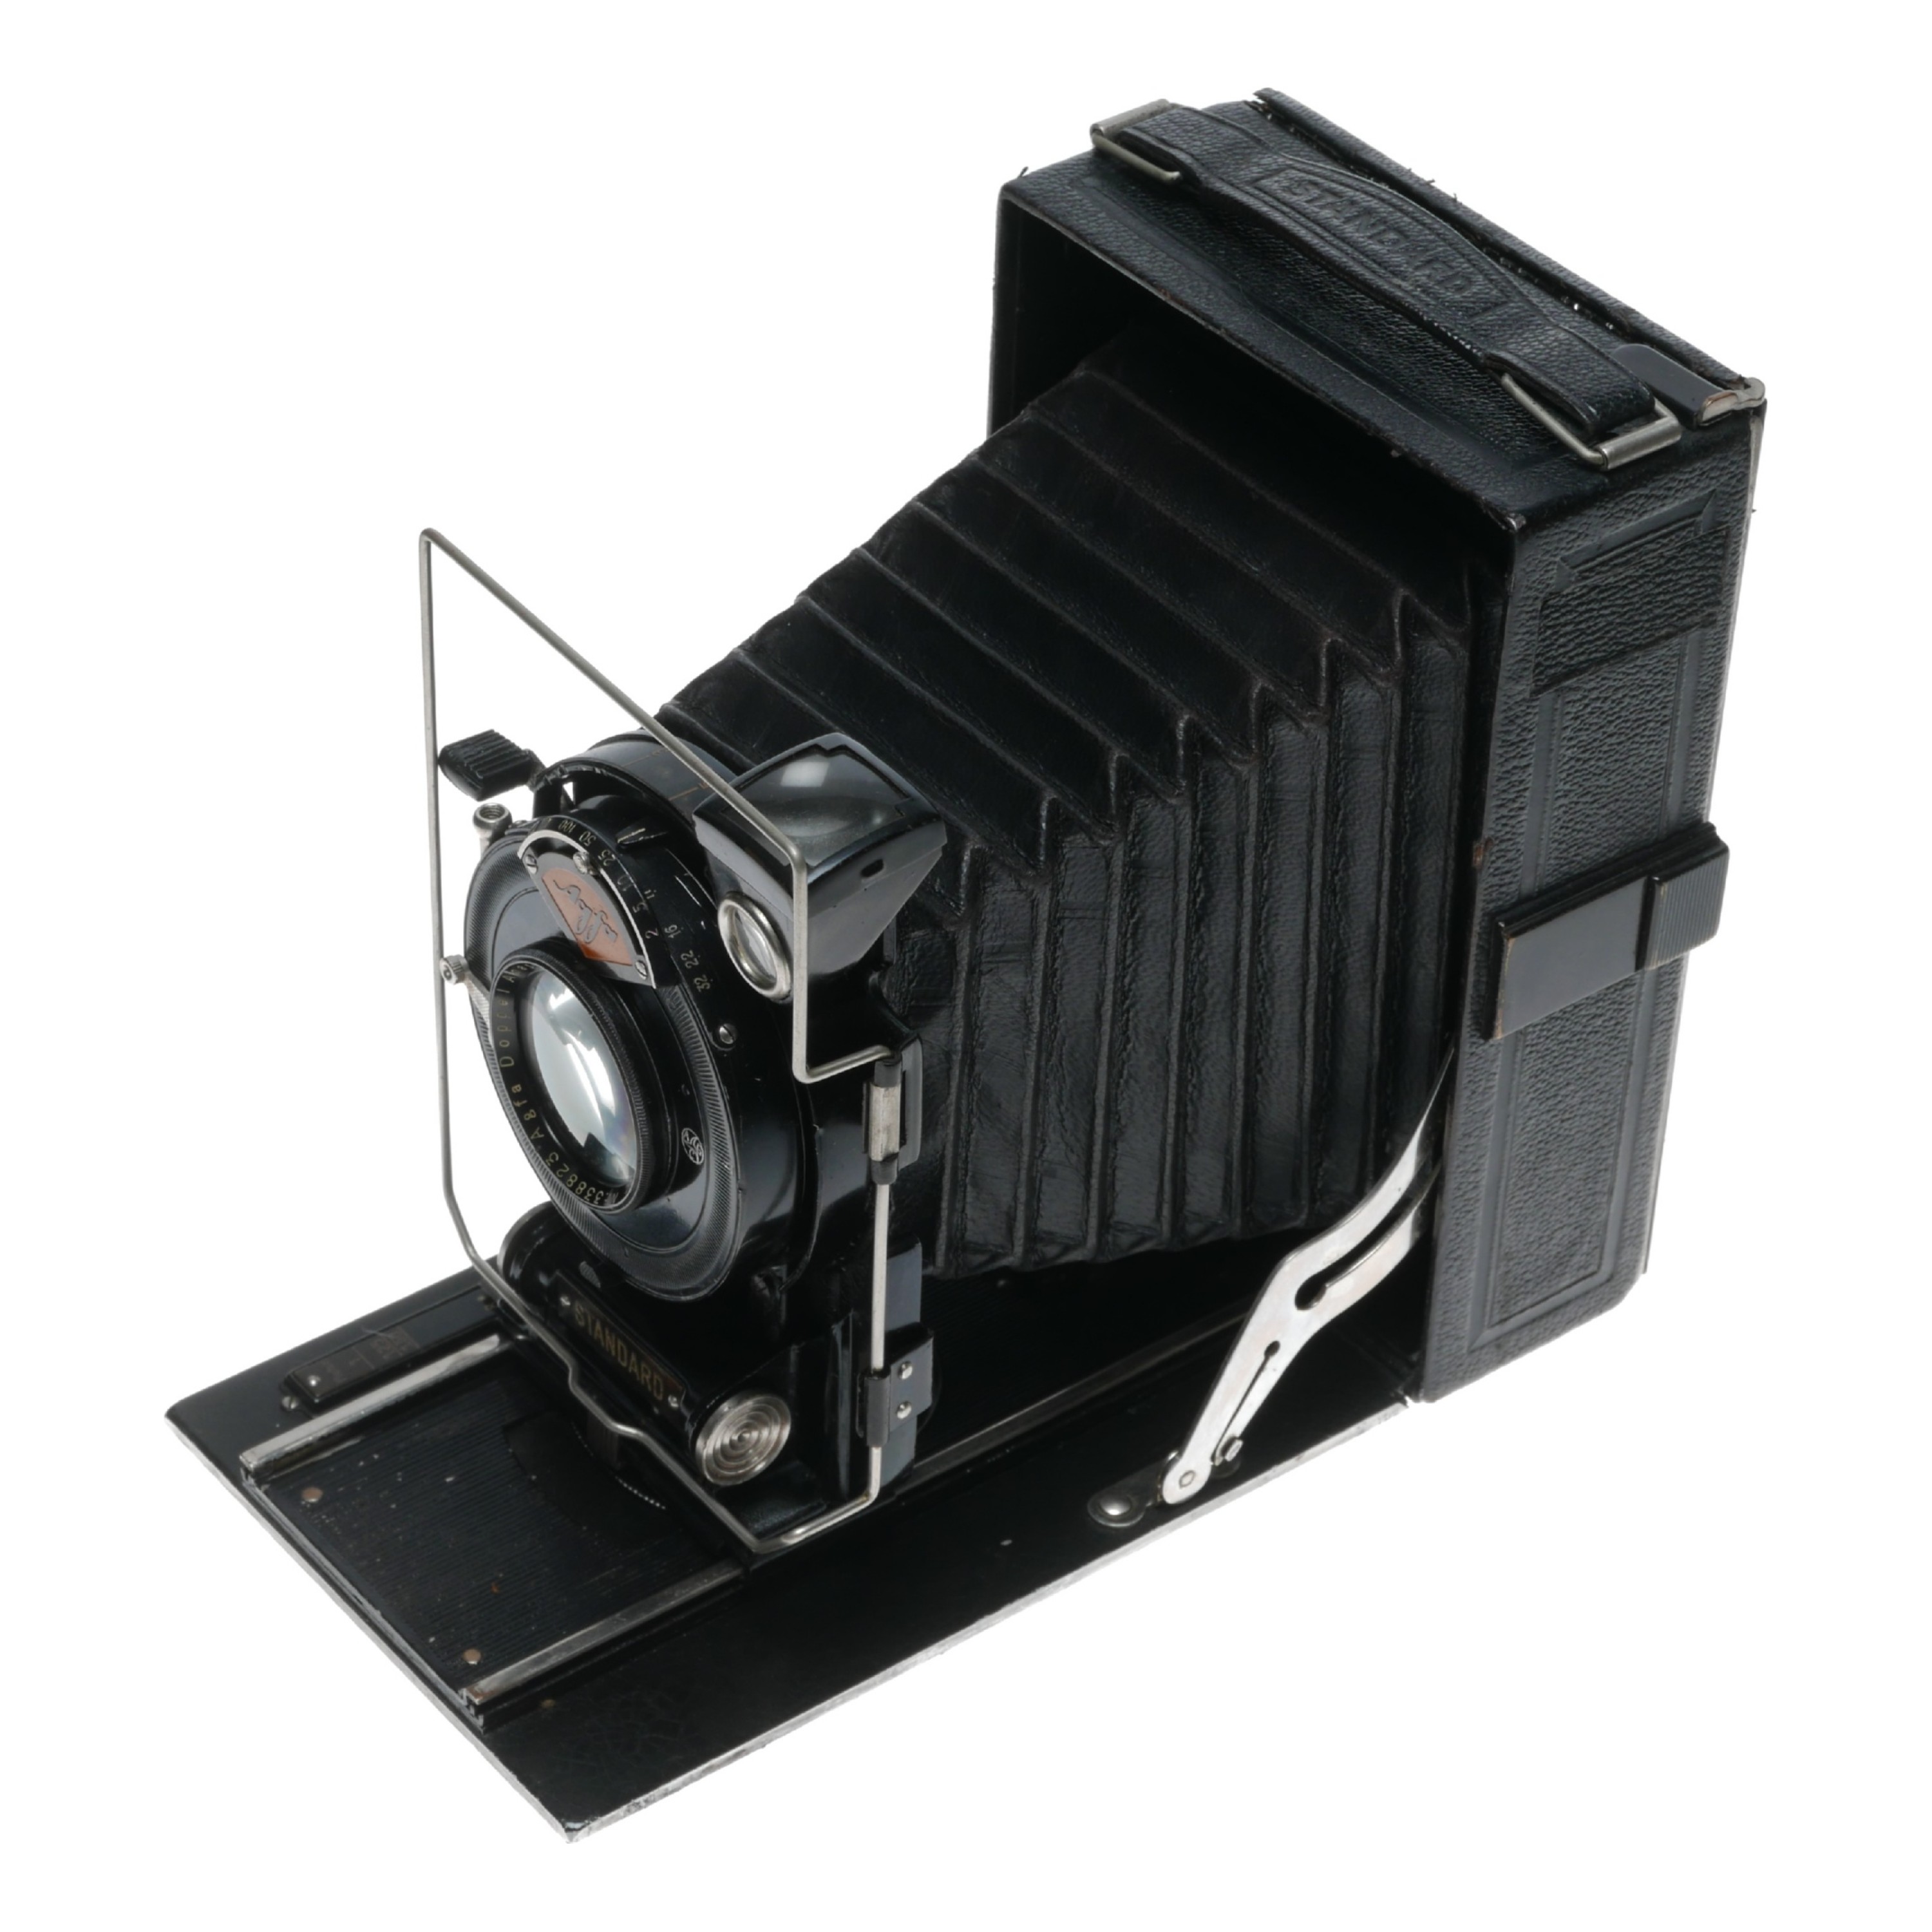 Agfa Agfa Standard Model 208 9x12 Plate Folding Camera 1:4.5 f=13.5cm 